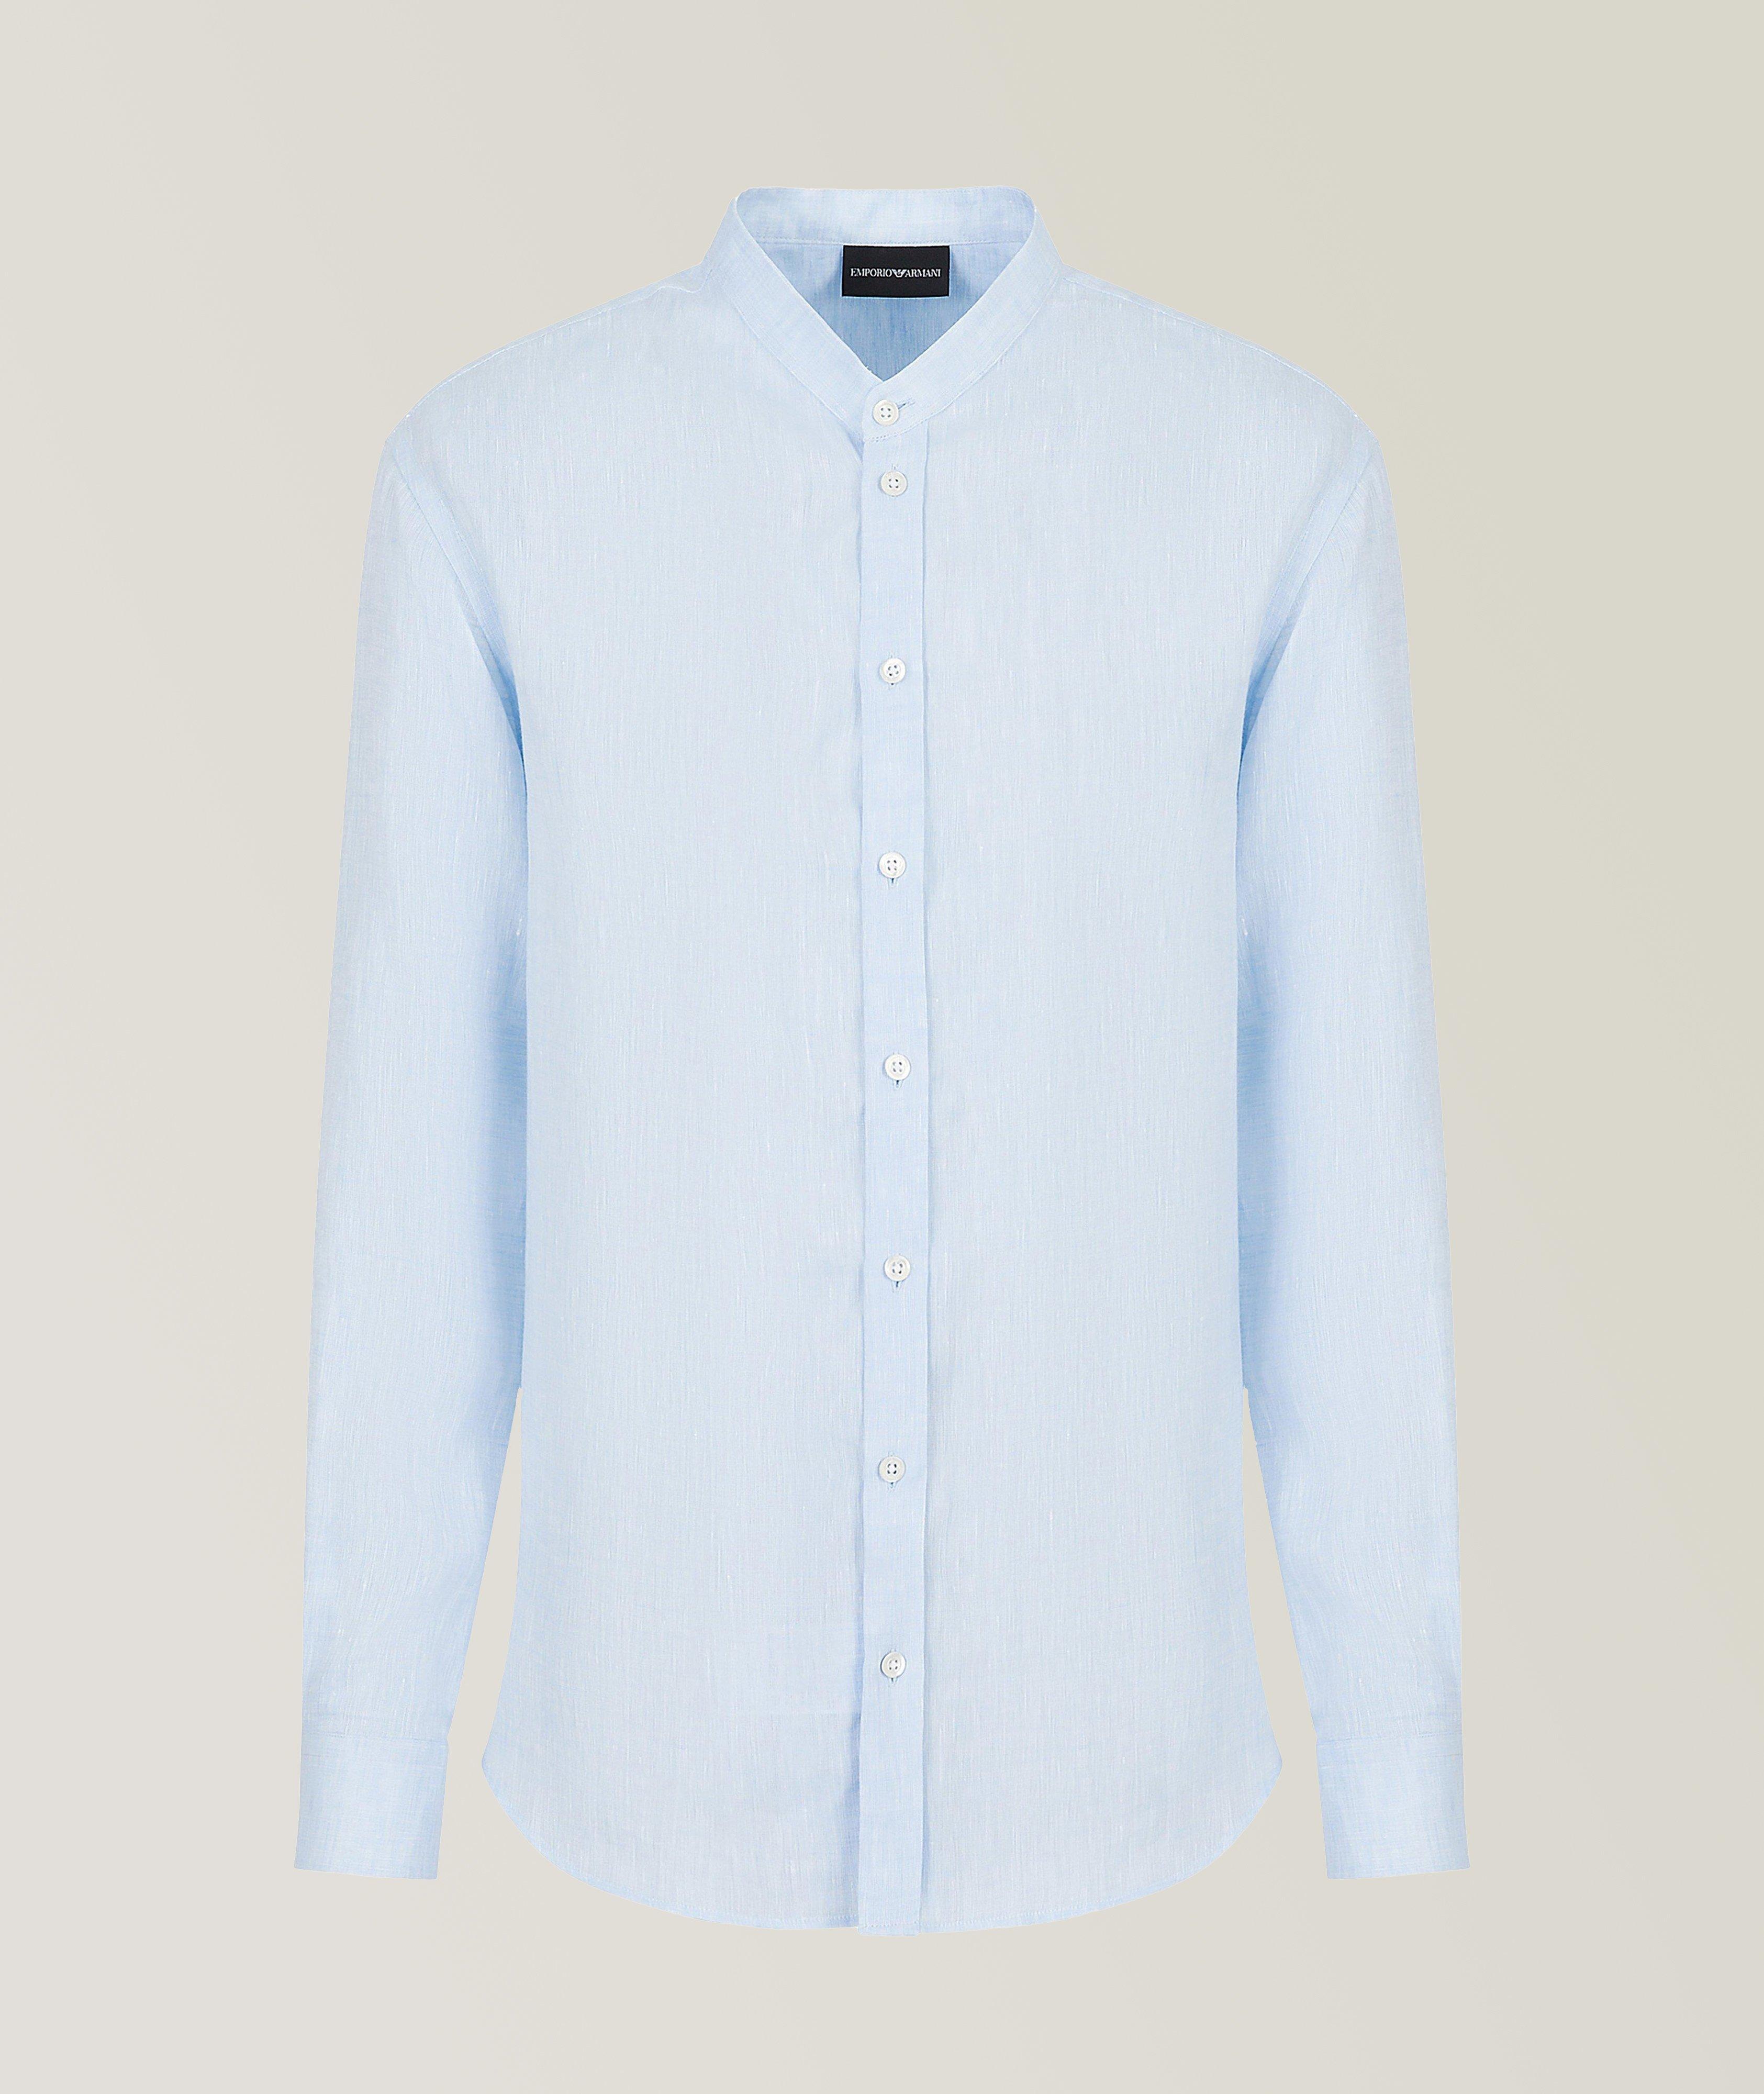 Contemporary-Fit Linen Dress Shirt image 0